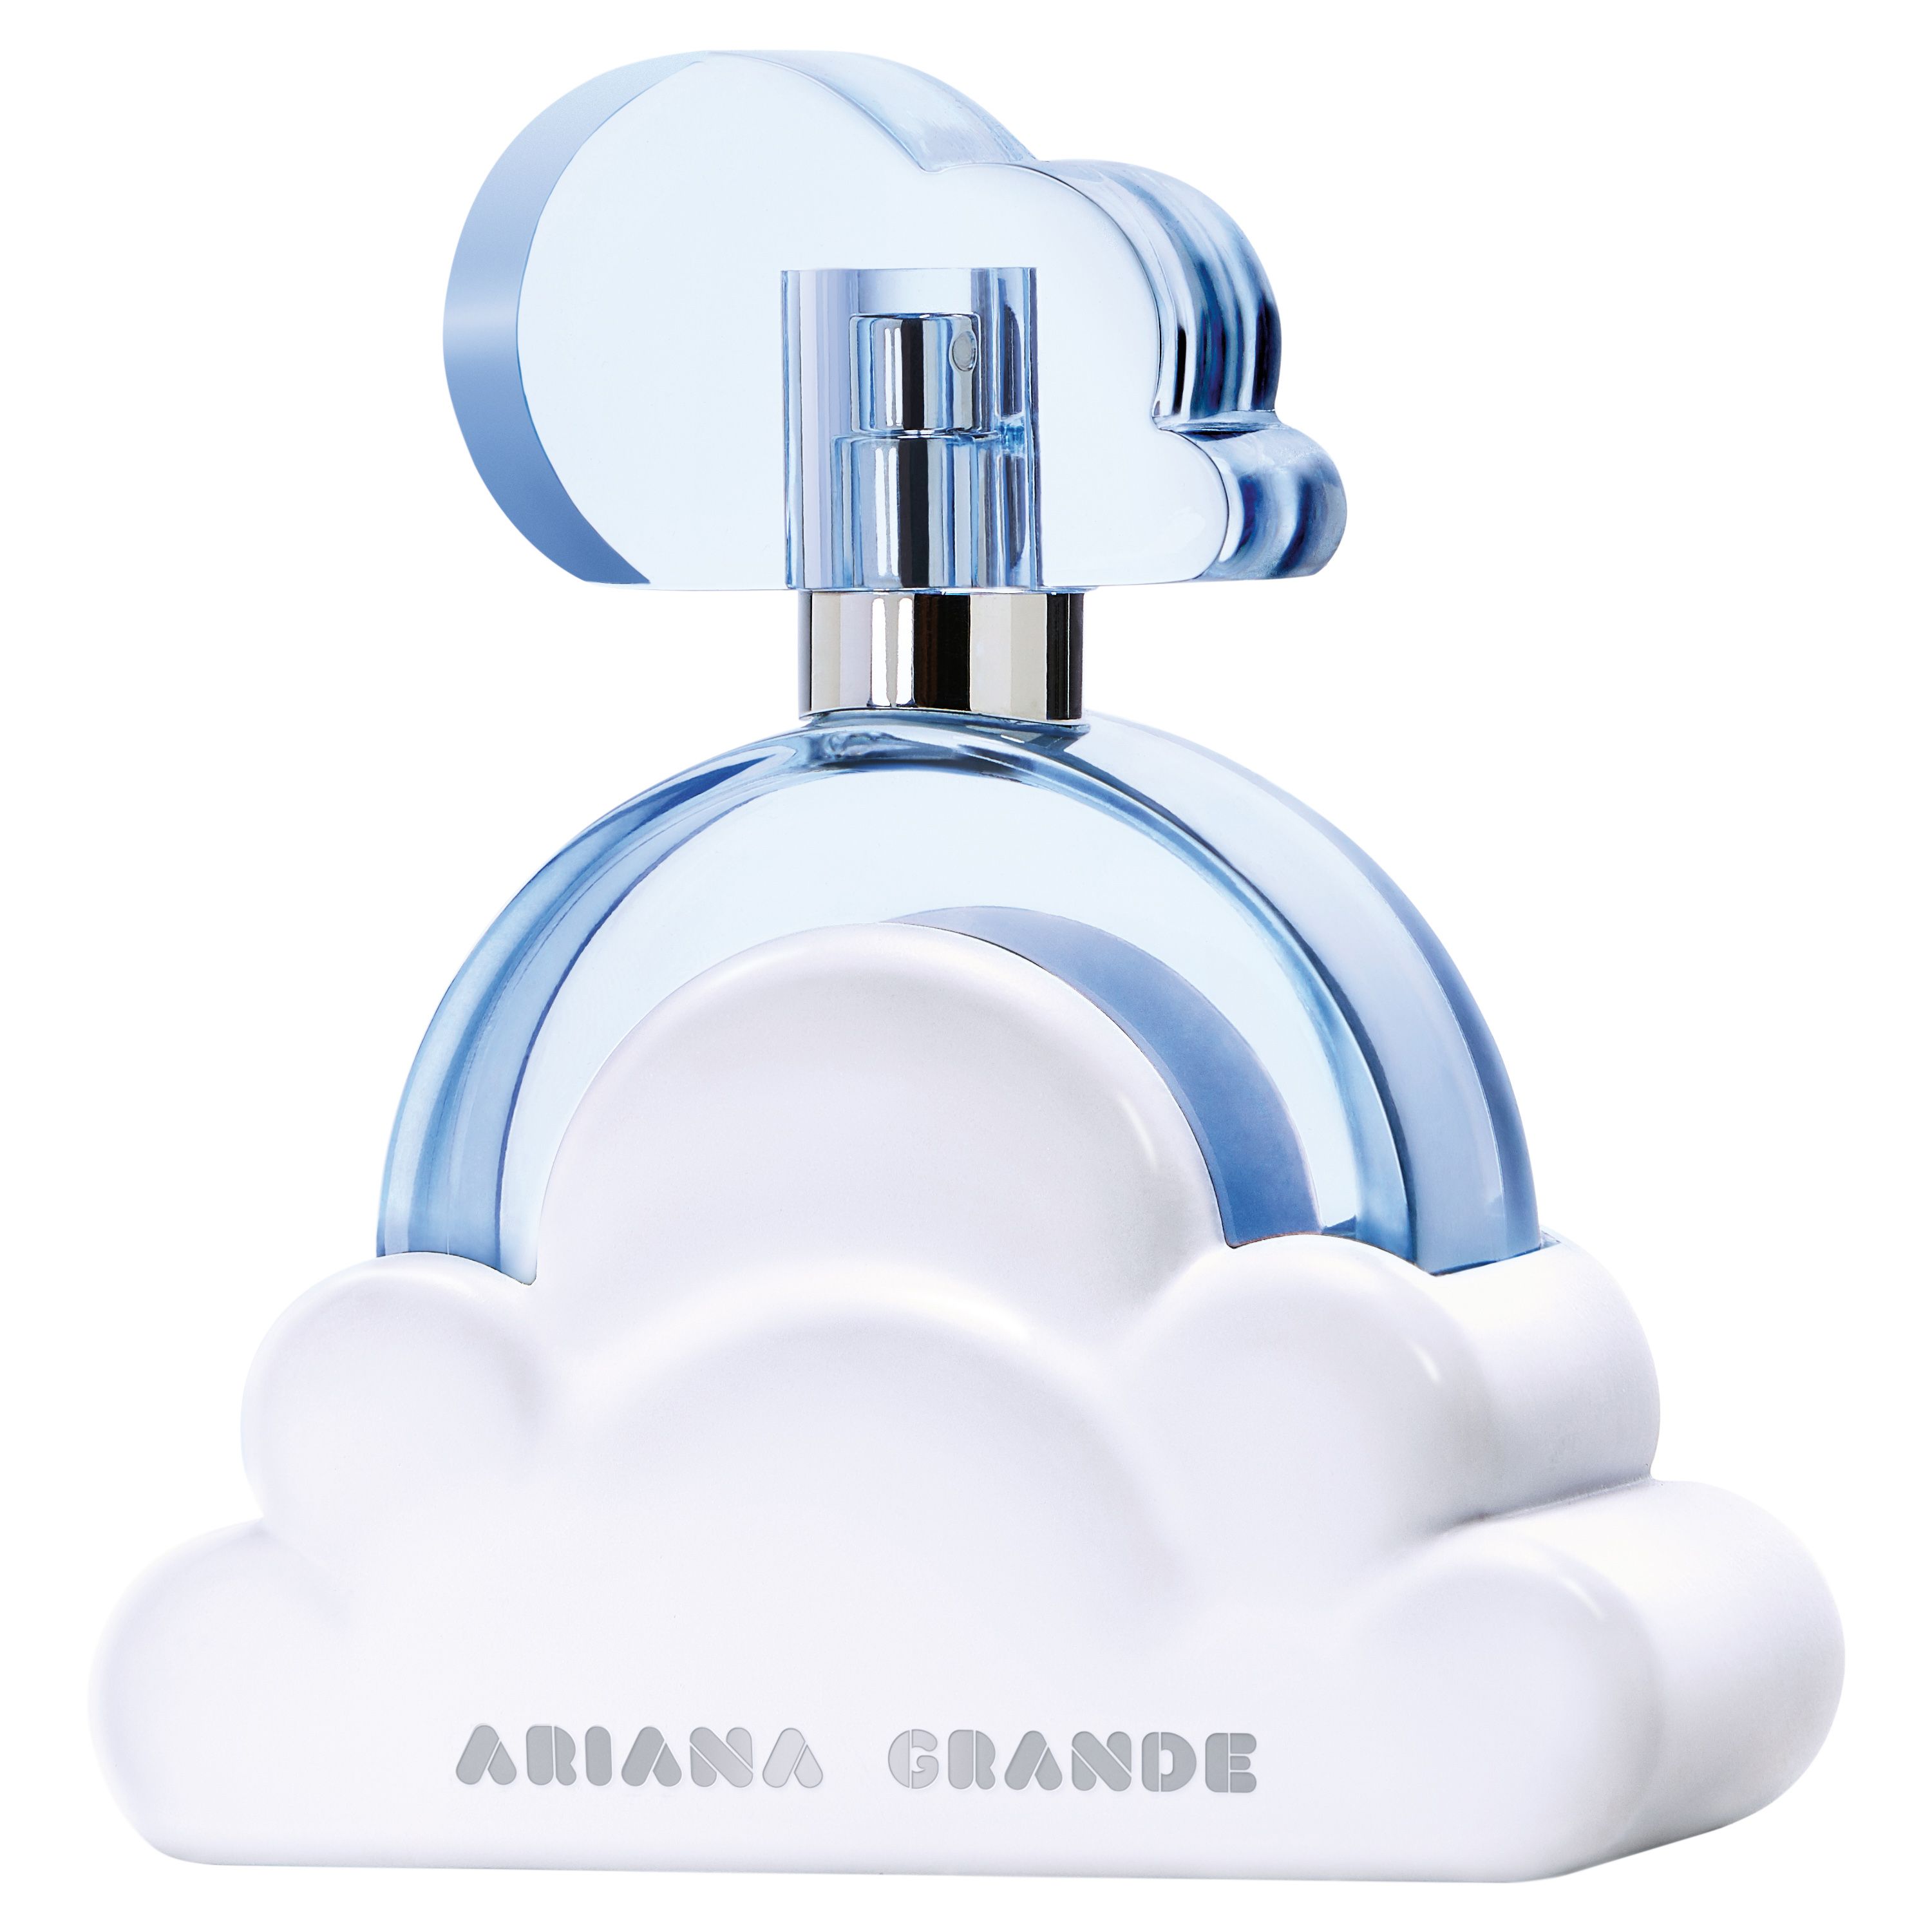 Ariana Grande Cloud Eau De Parfum, Perfume for Women, 1 Oz